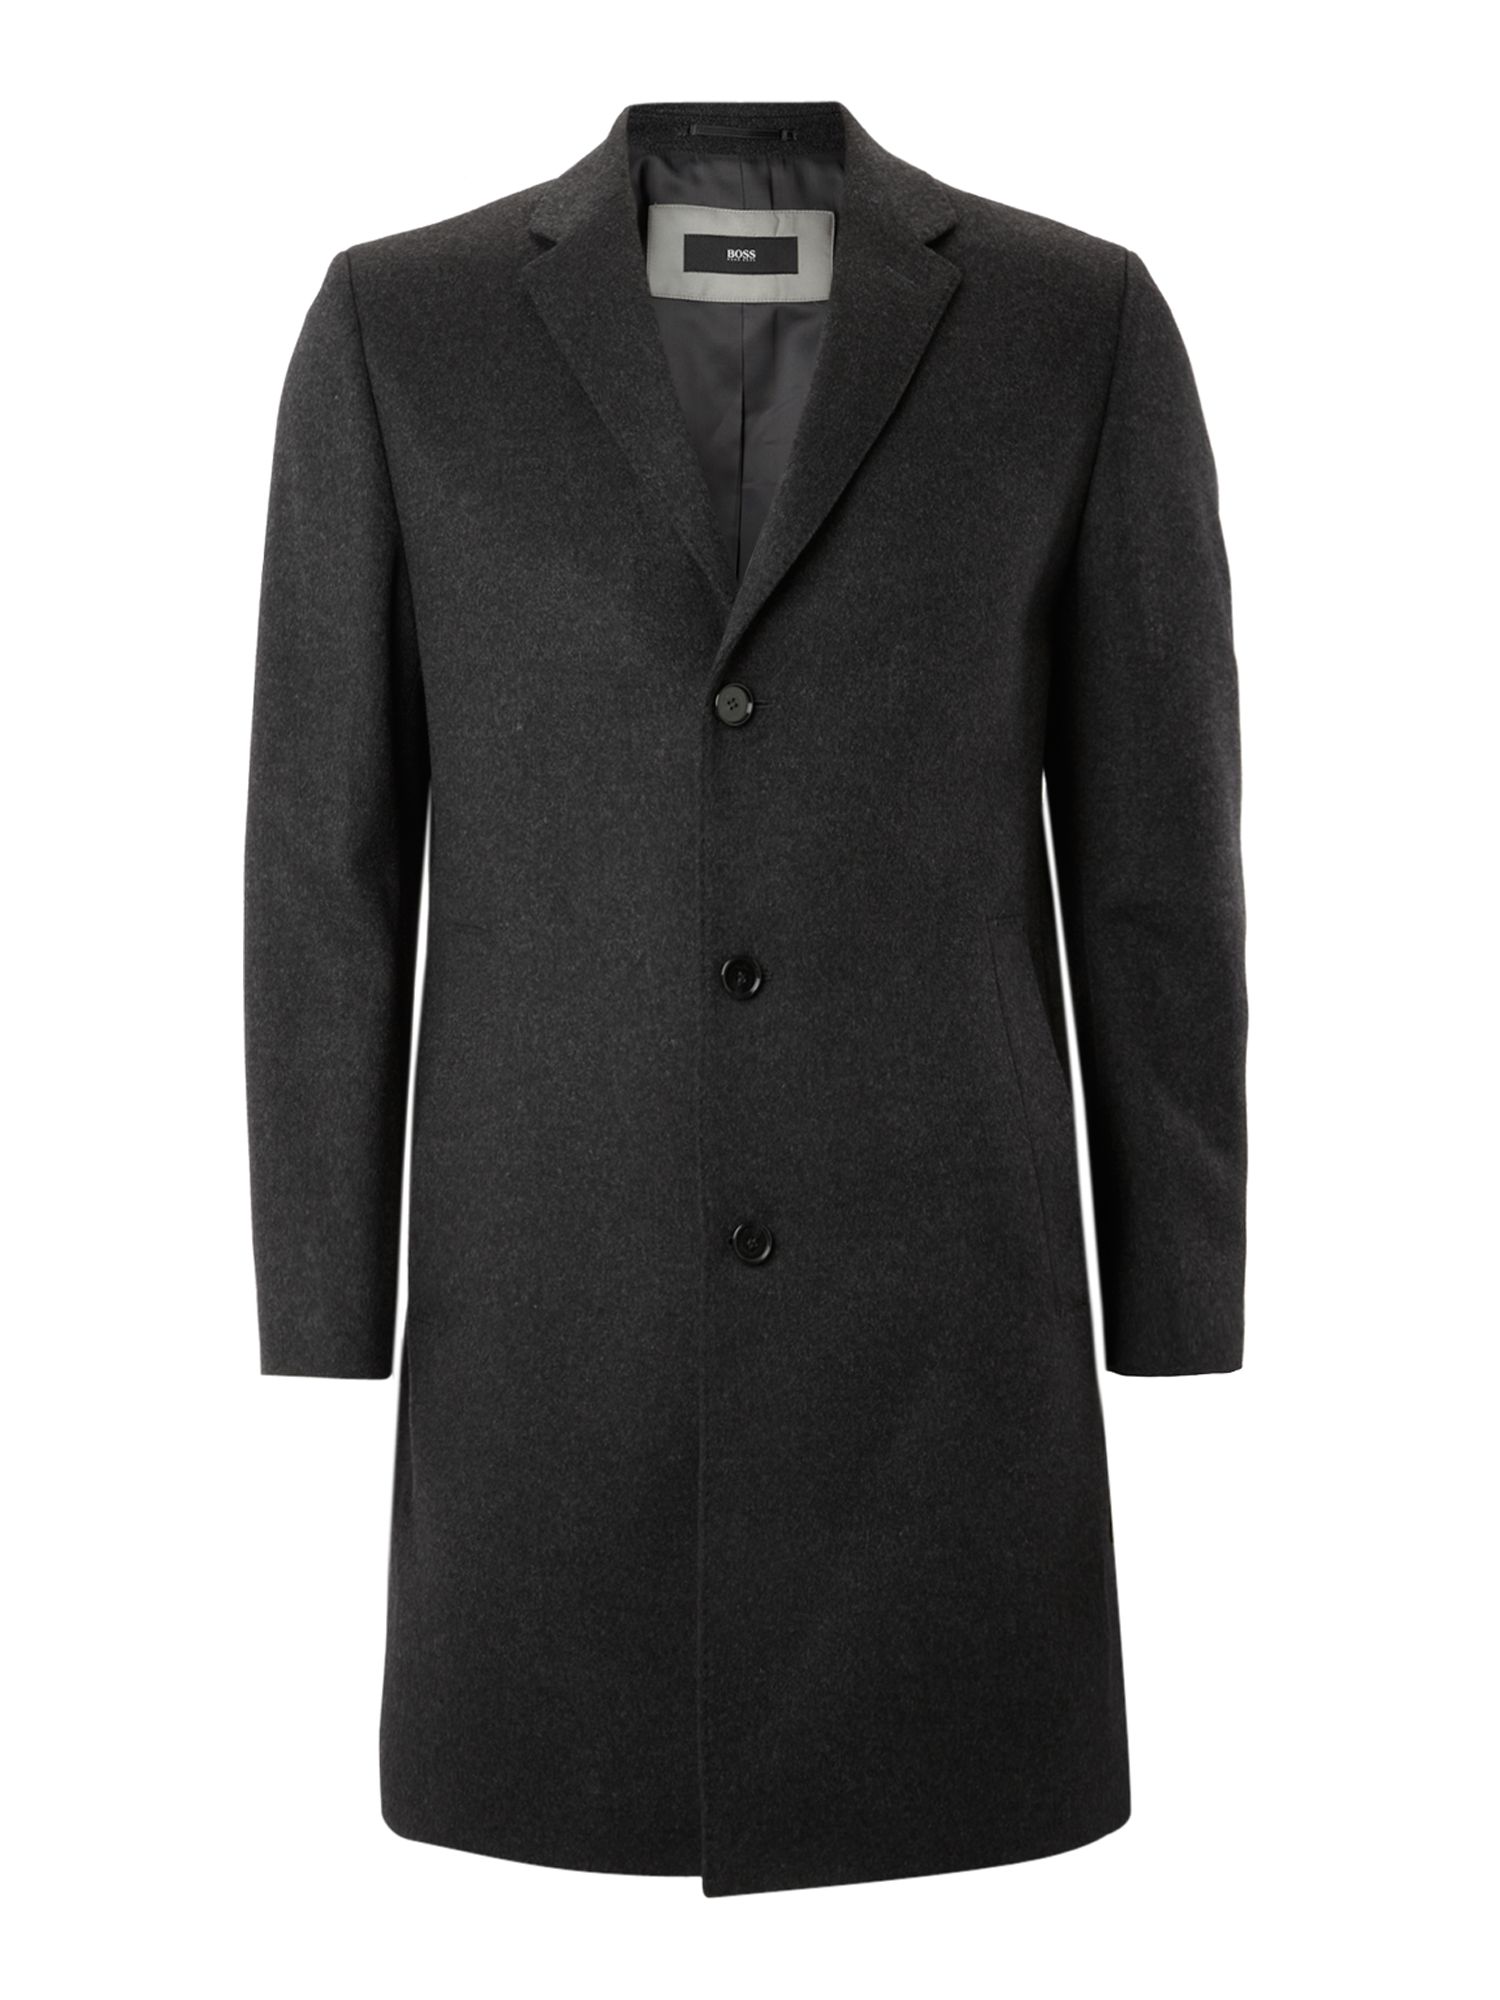 Hugo Boss Wool Cashmere Stratus Overcoat in Black for Men | Lyst